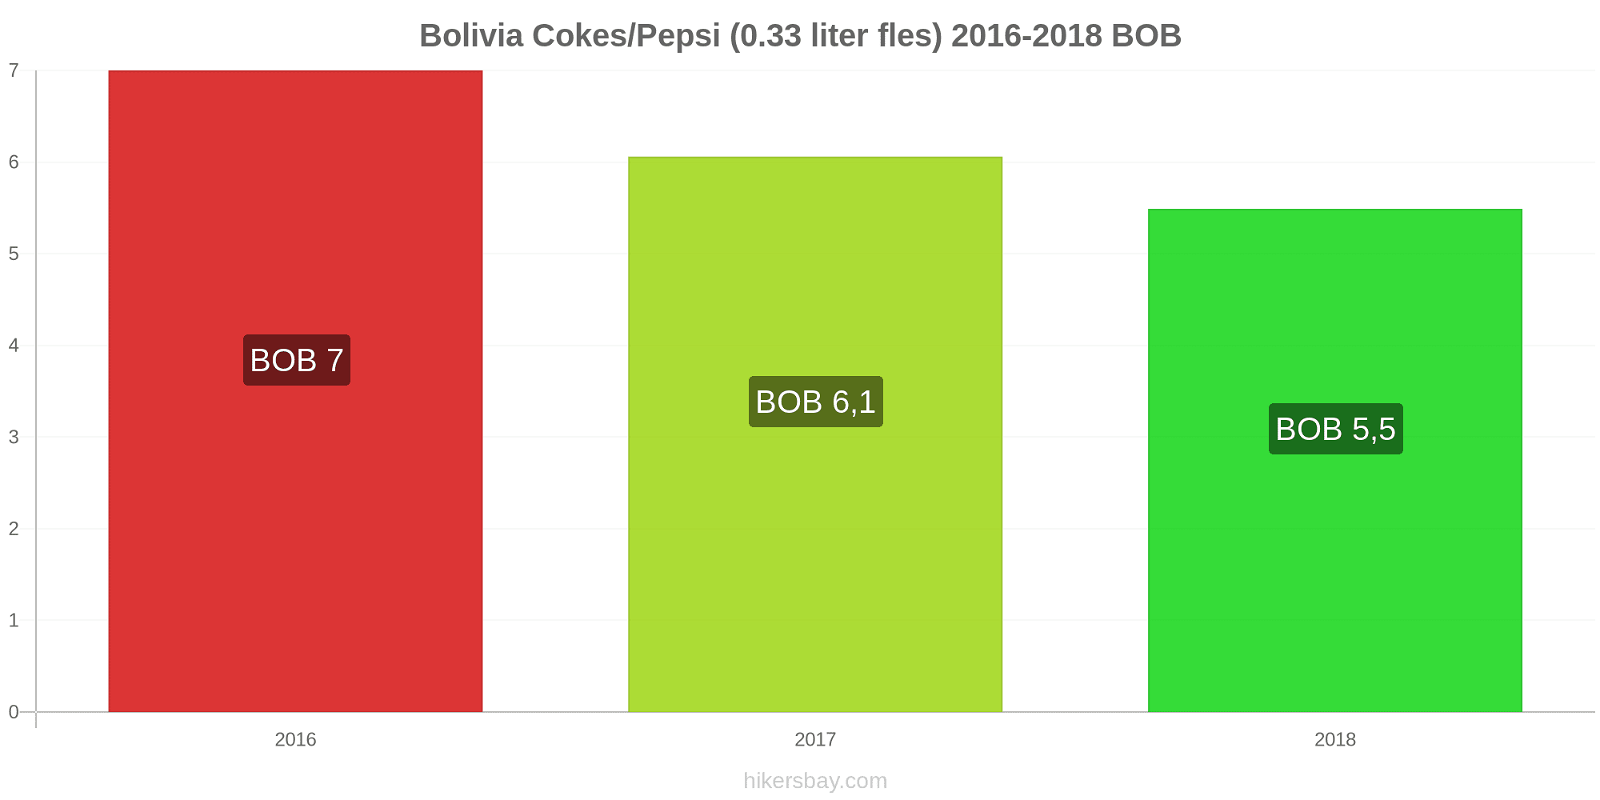 Bolivia prijswijzigingen Coca-Cola/Pepsi (0.33 liter fles) hikersbay.com